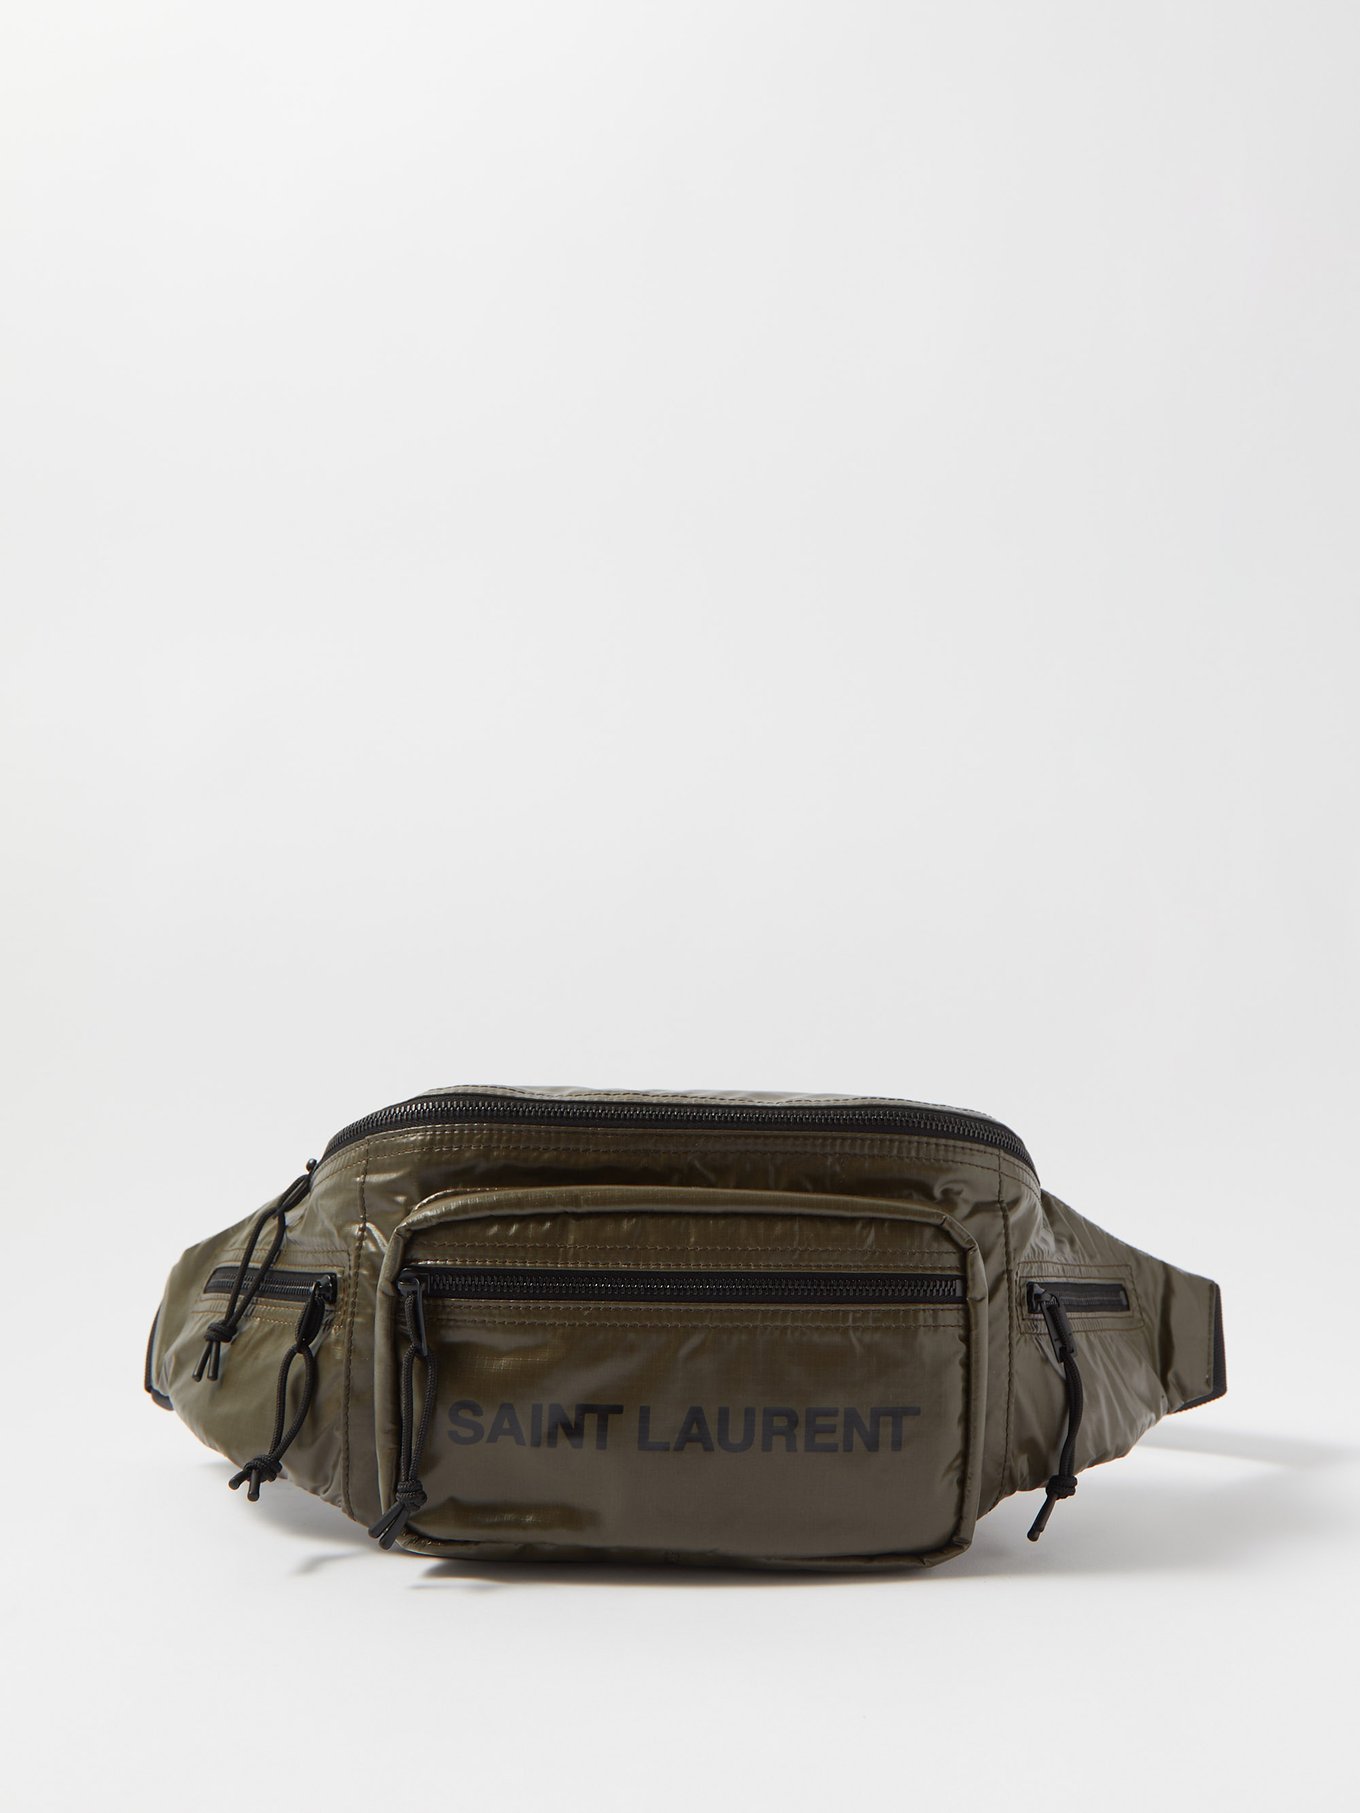 Saint Laurent Monogram Belt Bag